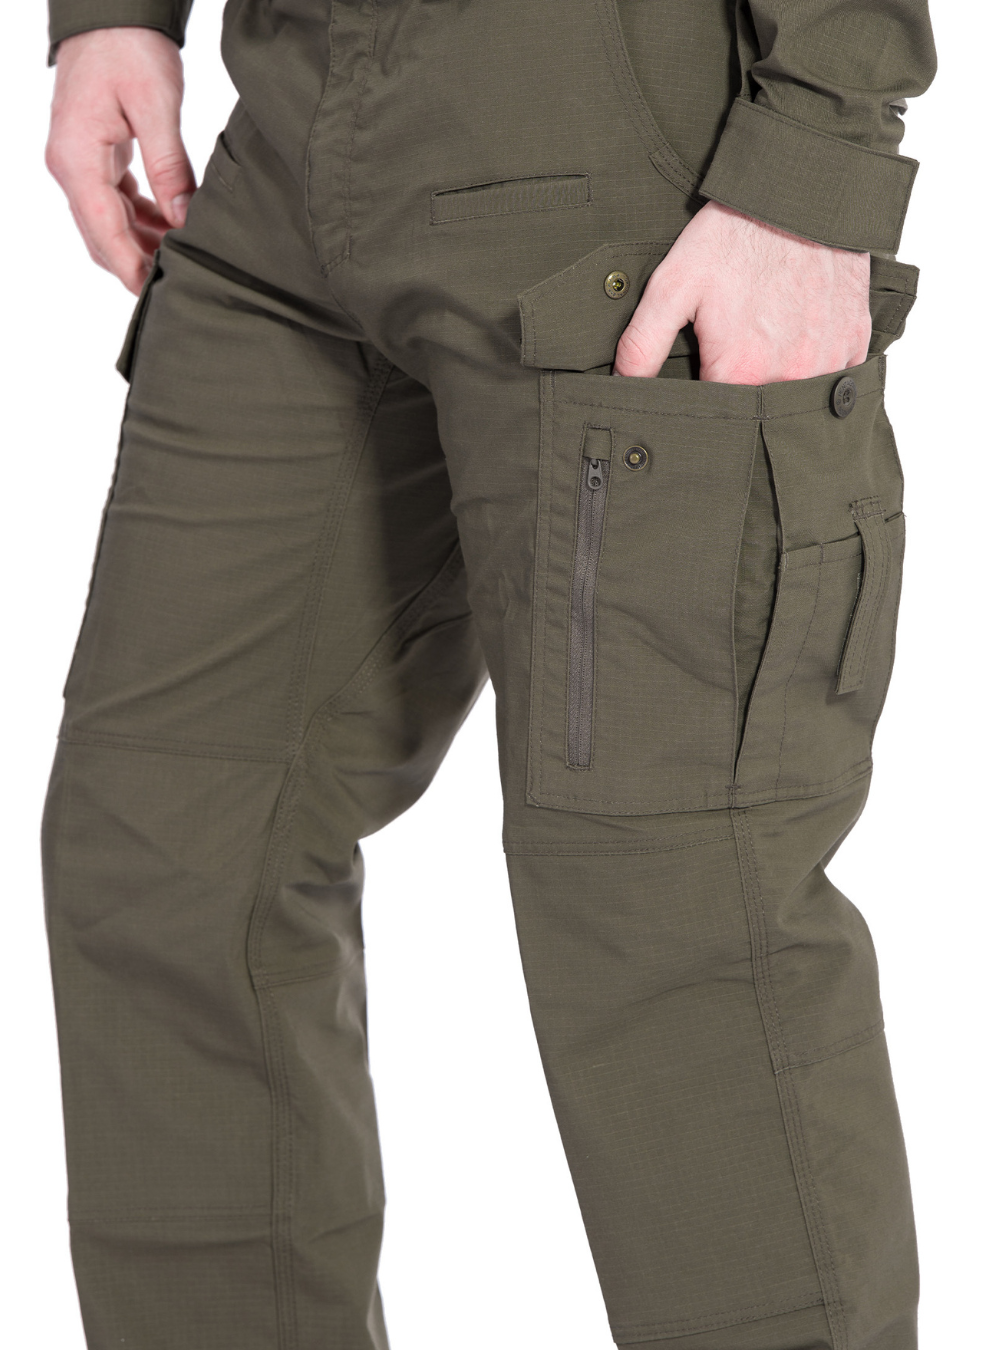 Pentagon Tactical Ranger Pants 2.0